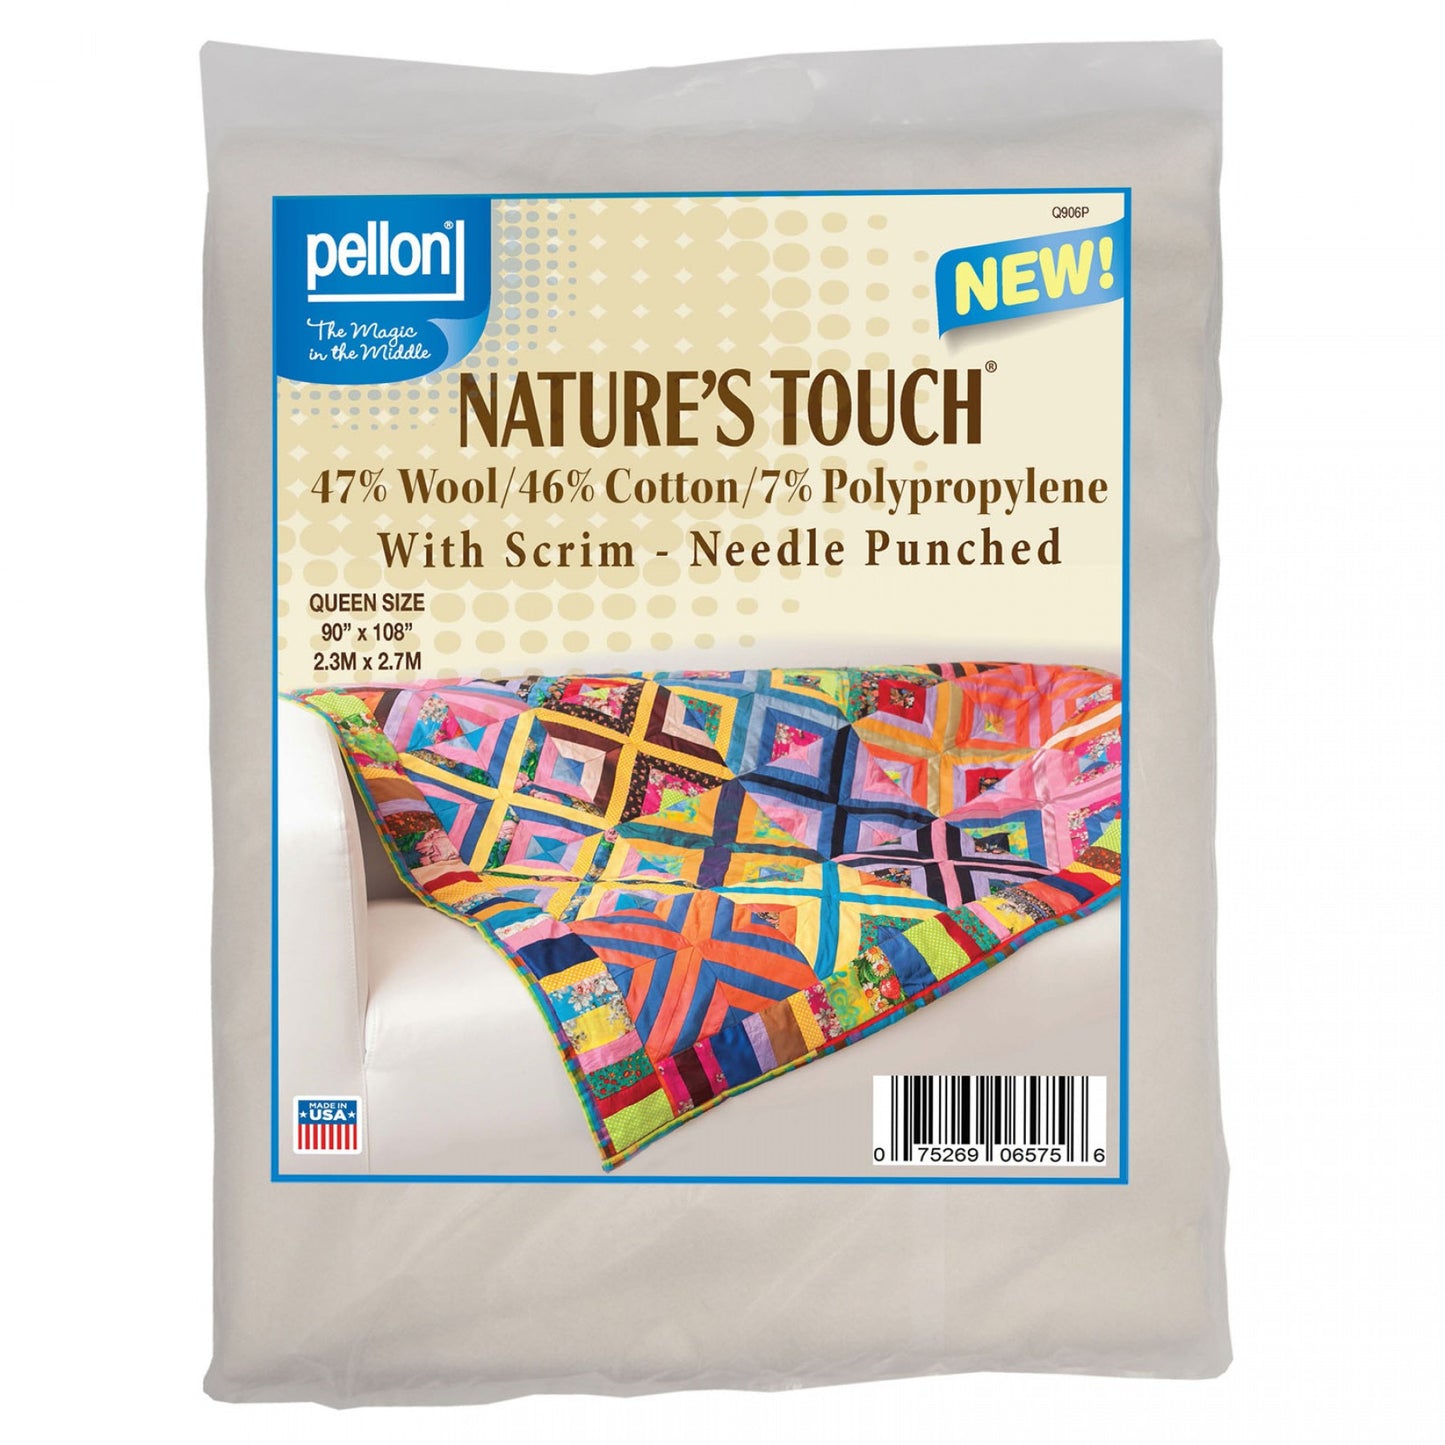 Pellon Nature's Touch 50/50 Wool/Cotton Blend - Queen Size 90" x 108"